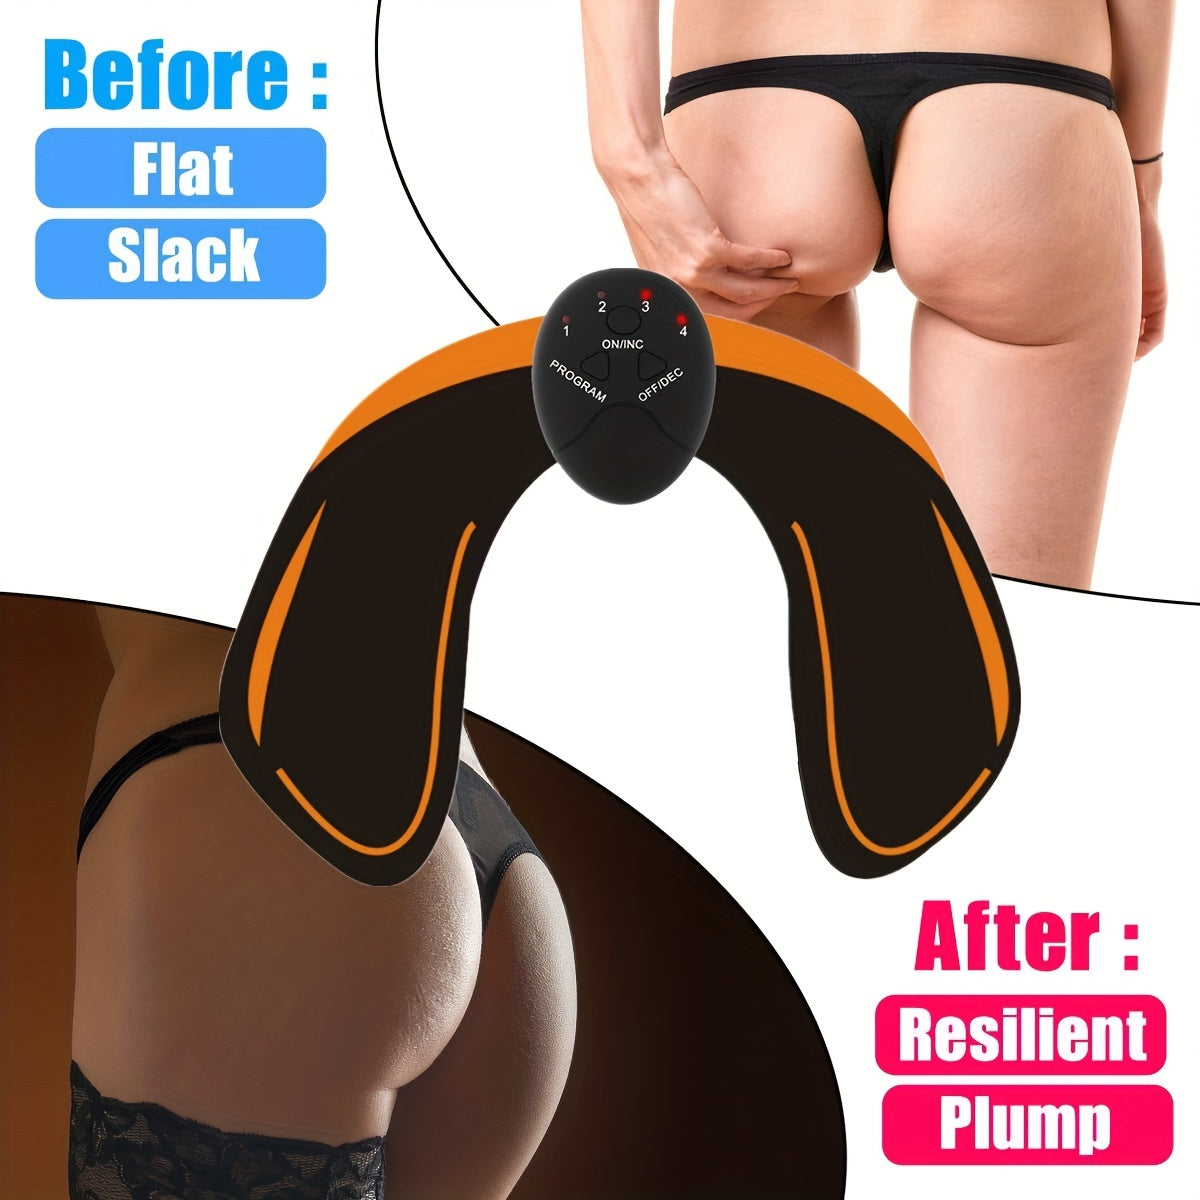 Hip Trainer, Buttock Lift Massage Device Smart